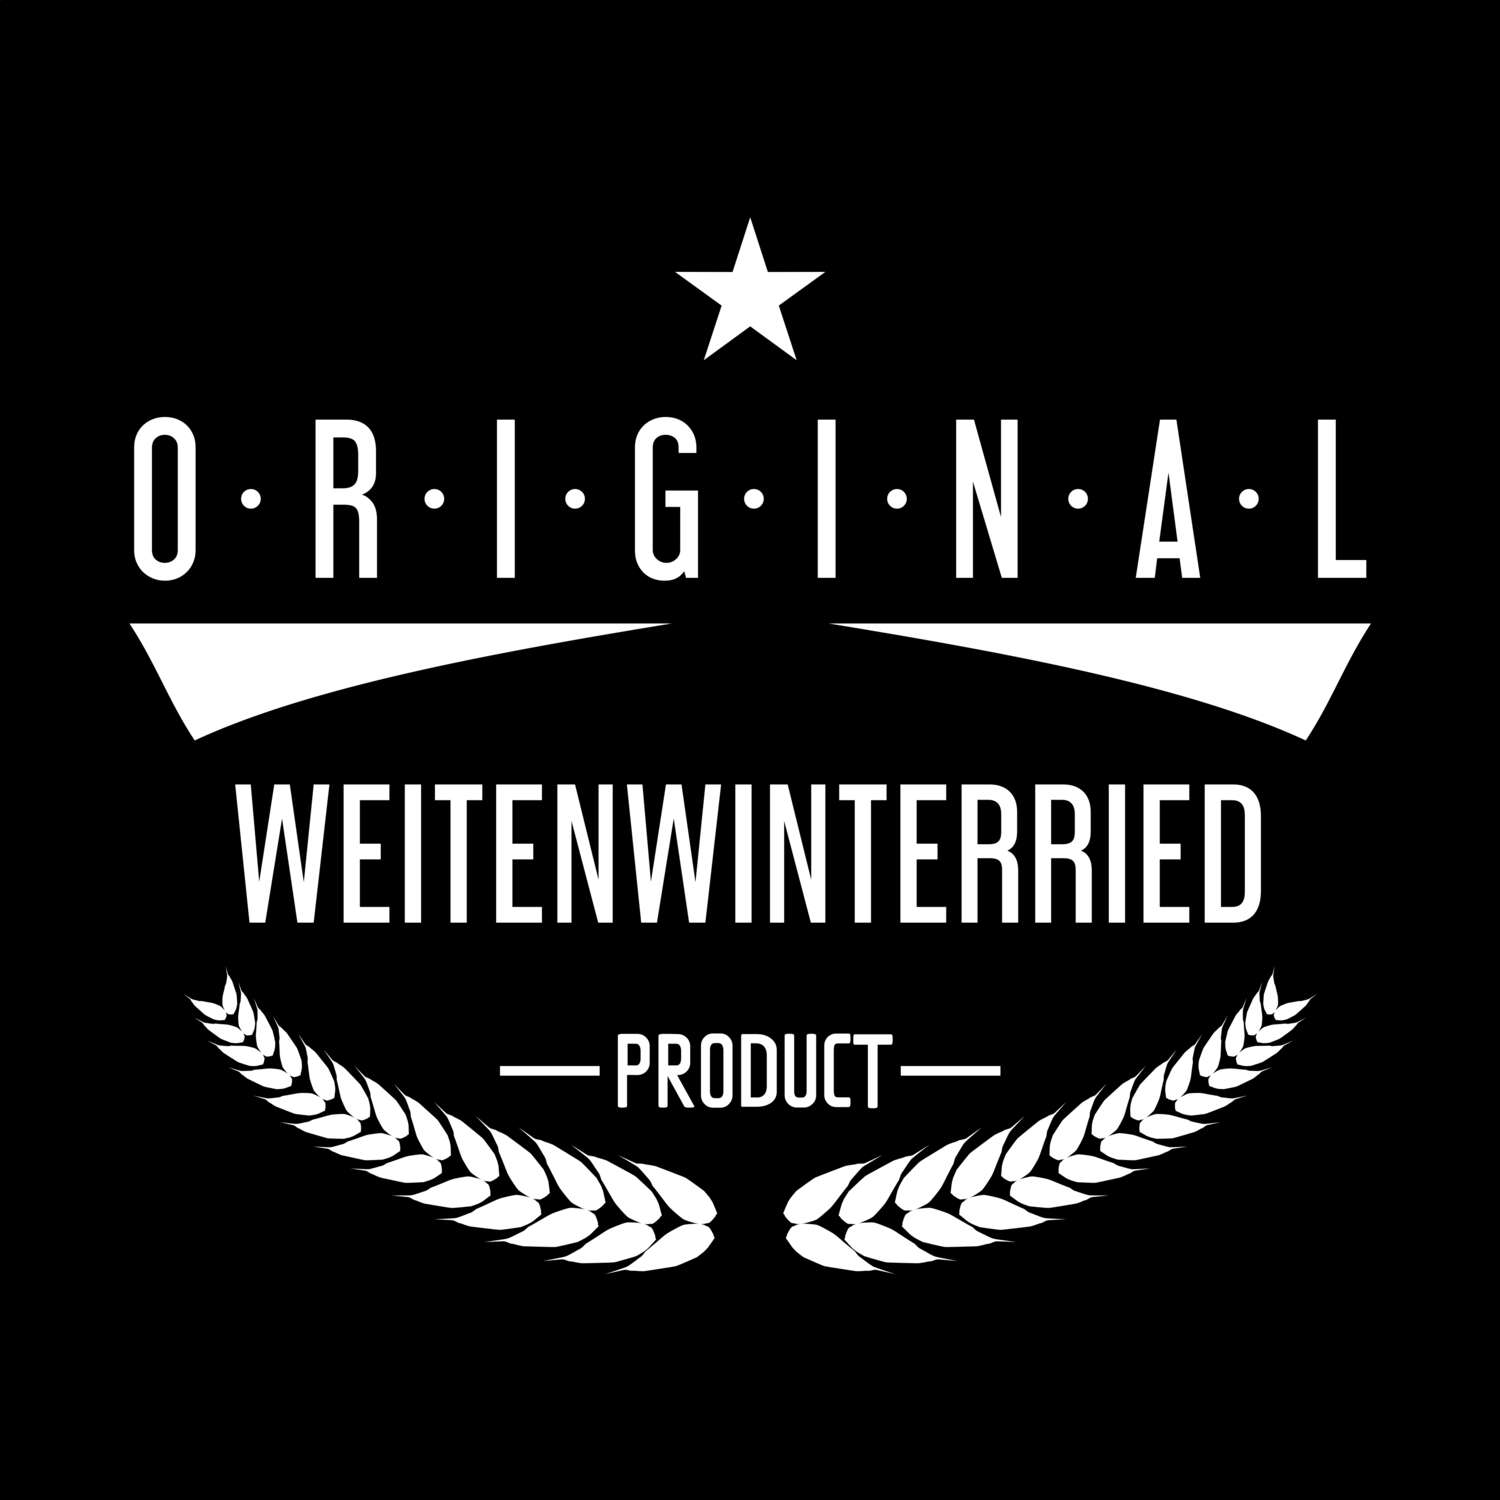 Weitenwinterried T-Shirt »Original Product«